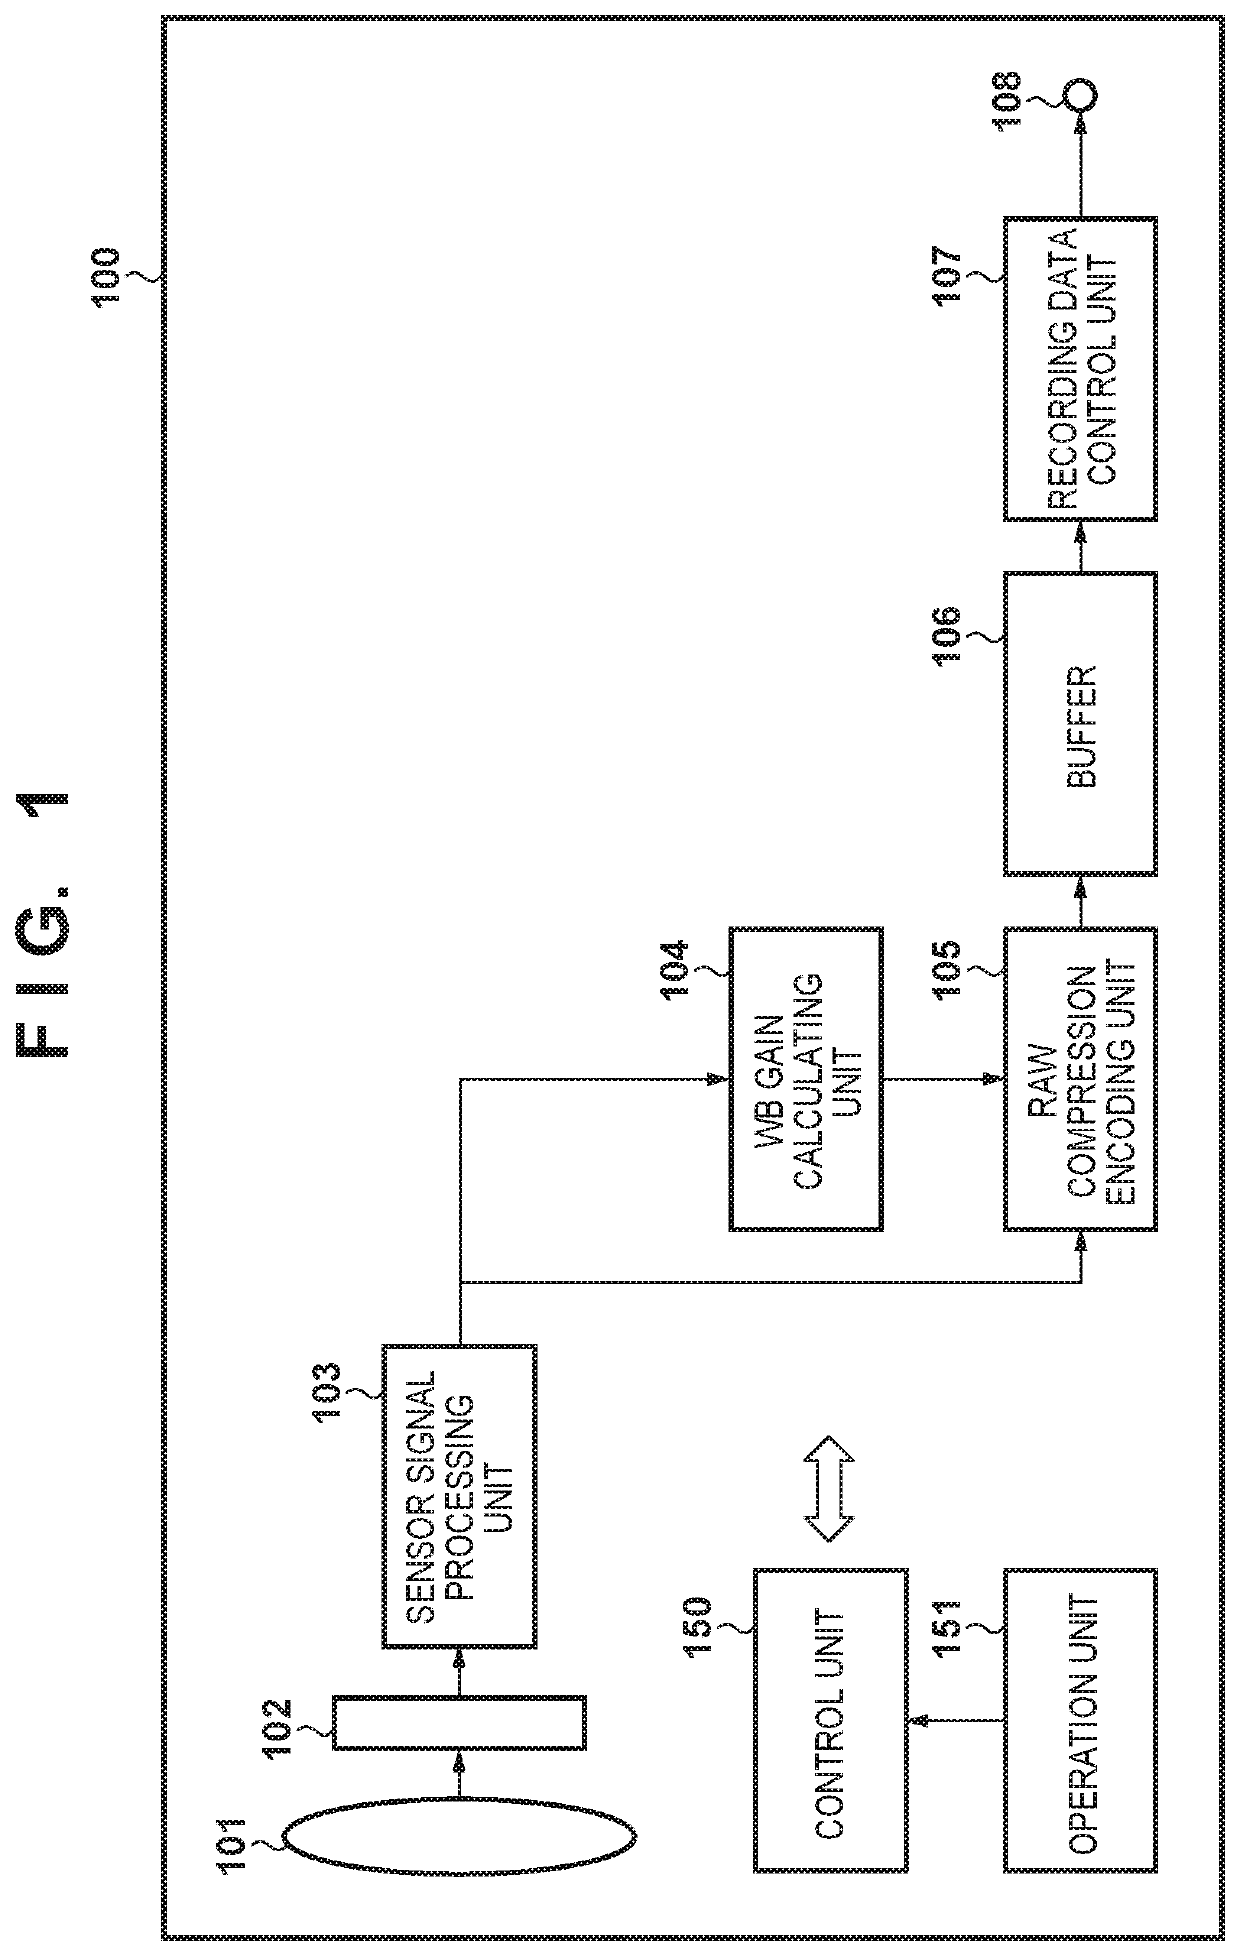 Image encoding apparatus, control method thereof, and non-transitory computer-readable storage medium